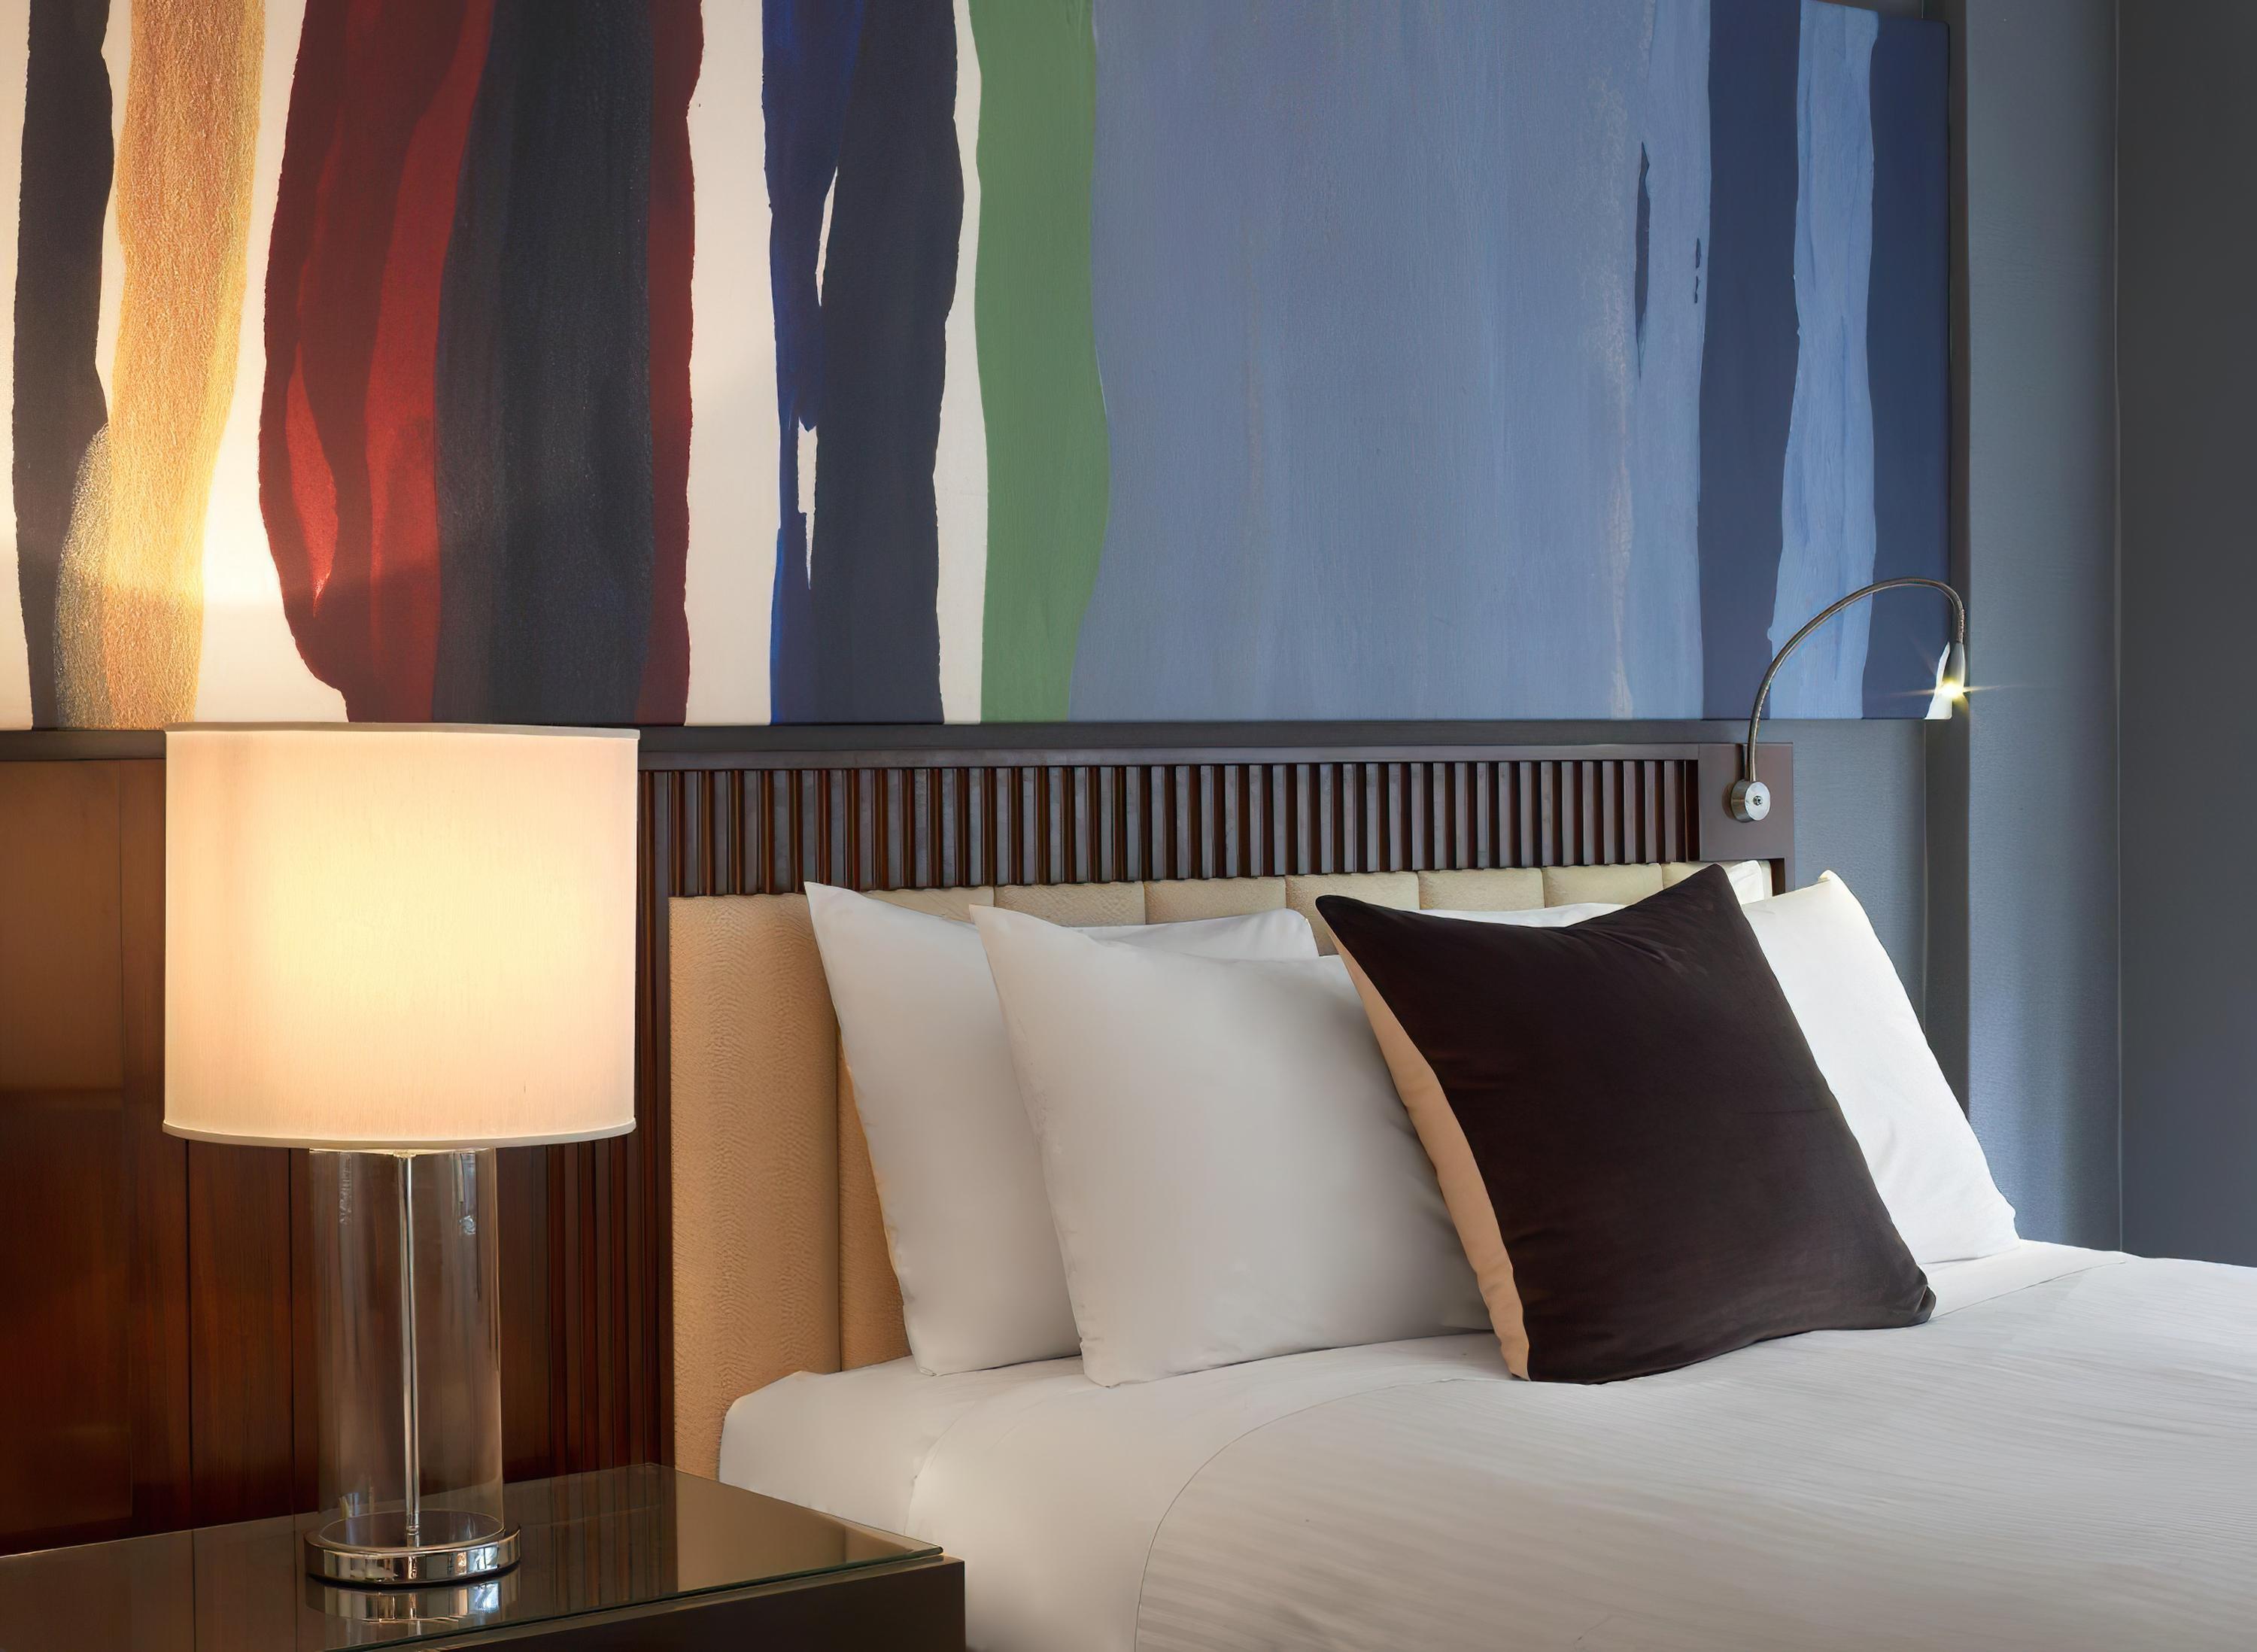 The Fifty Sonesta Select New York Hotel Ngoại thất bức ảnh